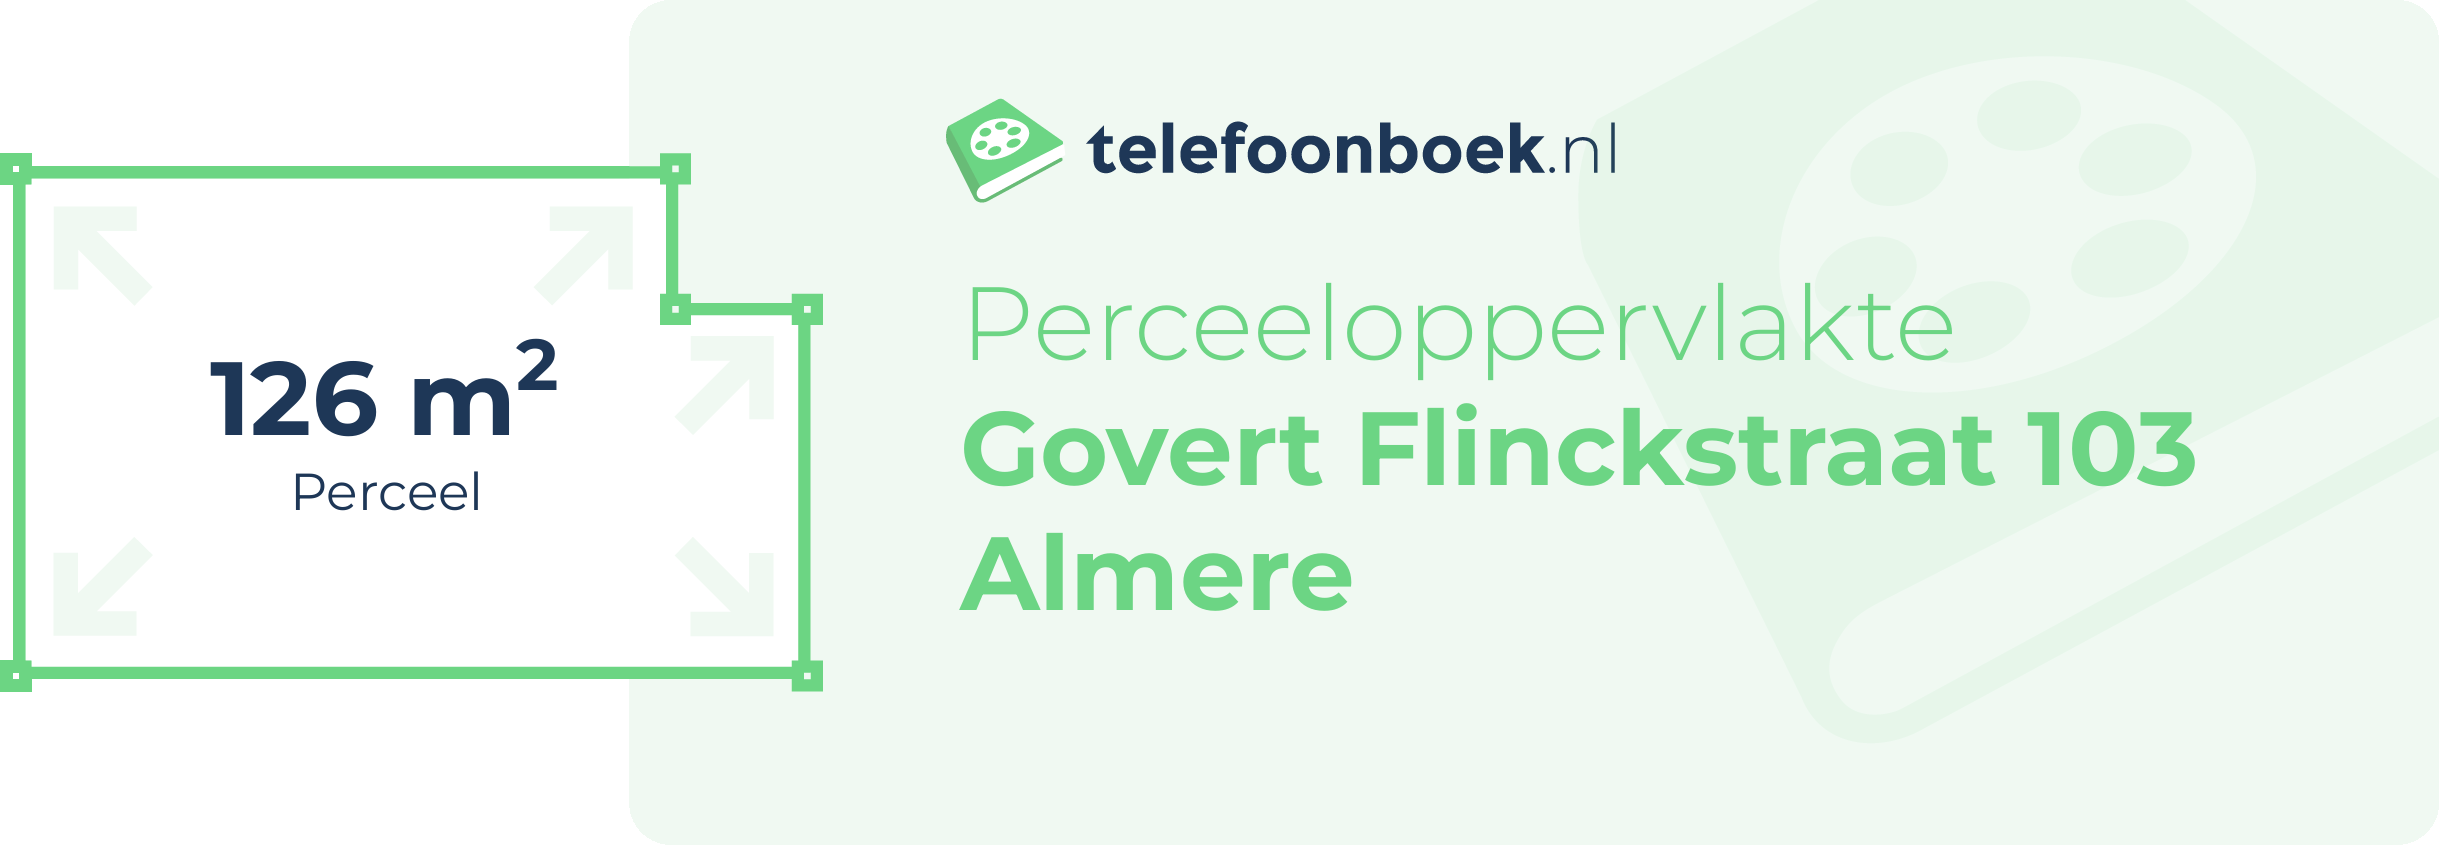 Perceeloppervlakte Govert Flinckstraat 103 Almere